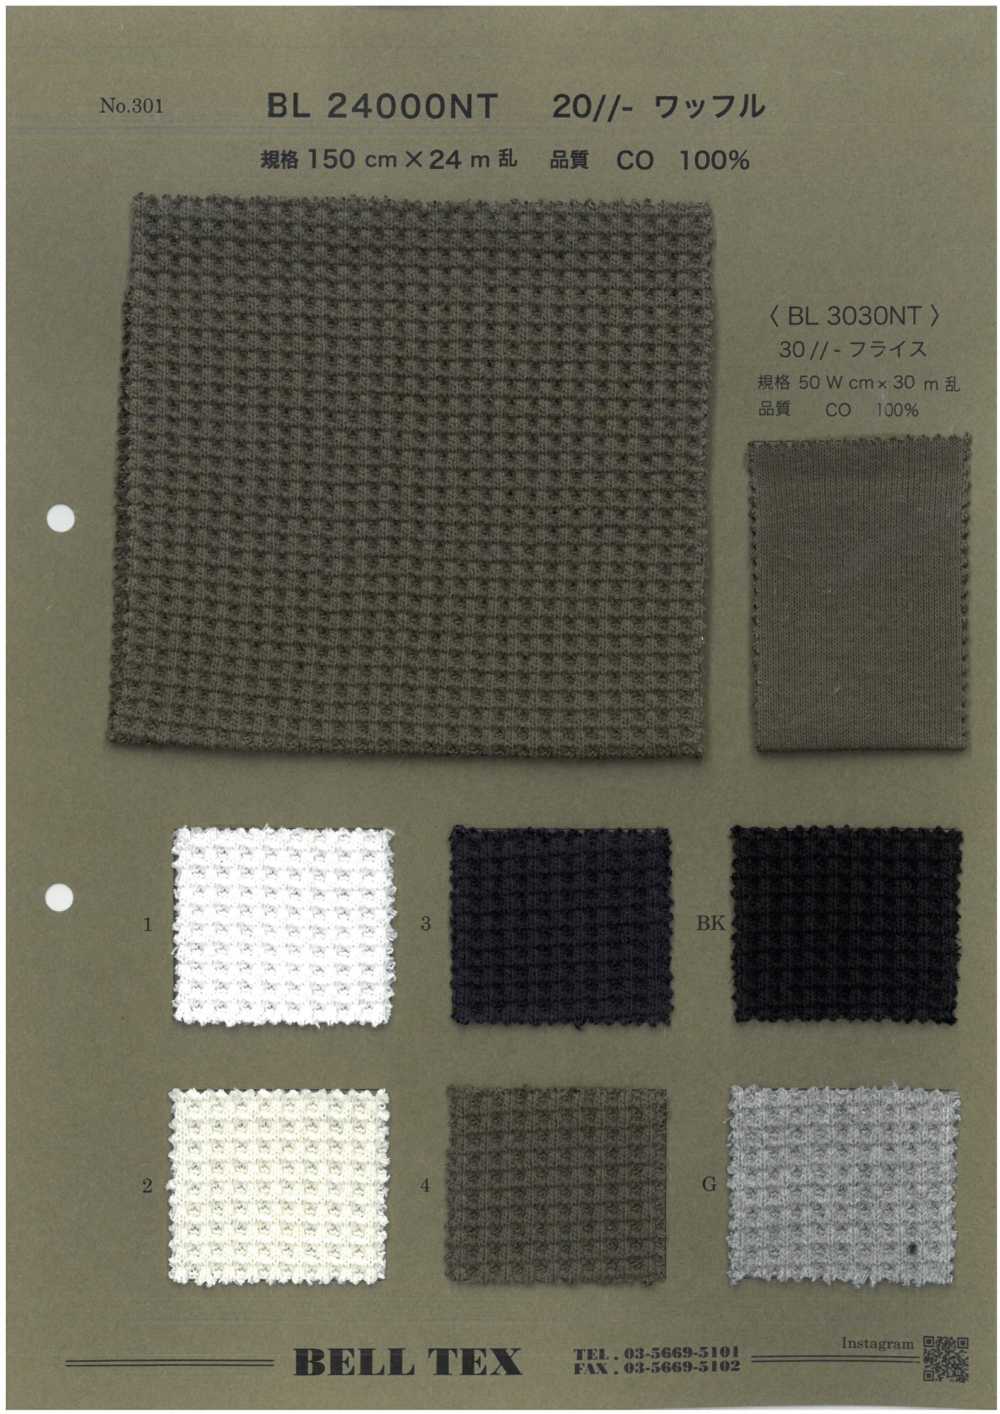 BL24000NT 20//- Waffle Knit[Textile / Fabric] Vertex